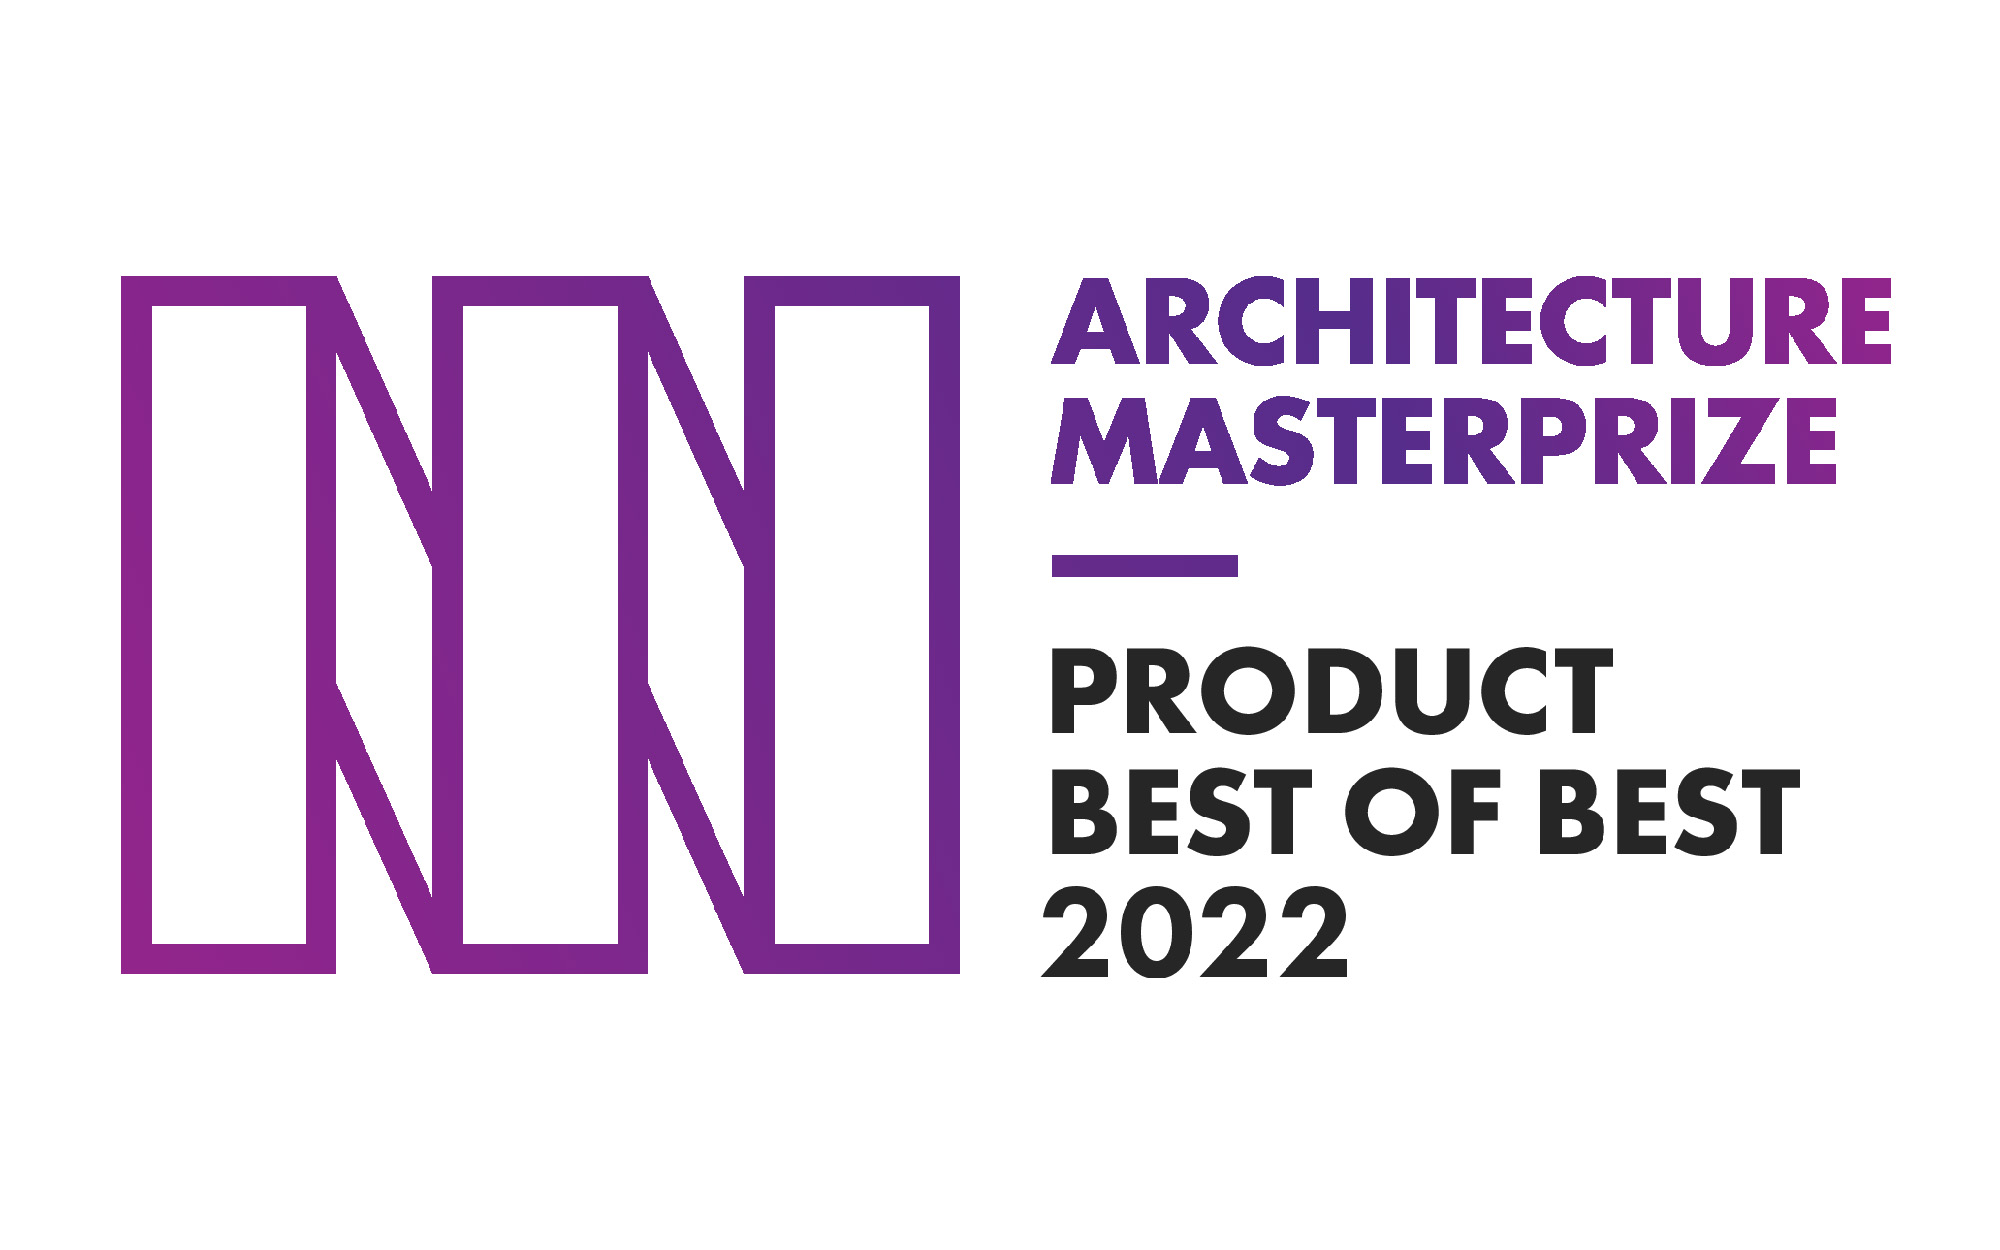 ENVELON Architecture MasterPrize Product Best of the Best